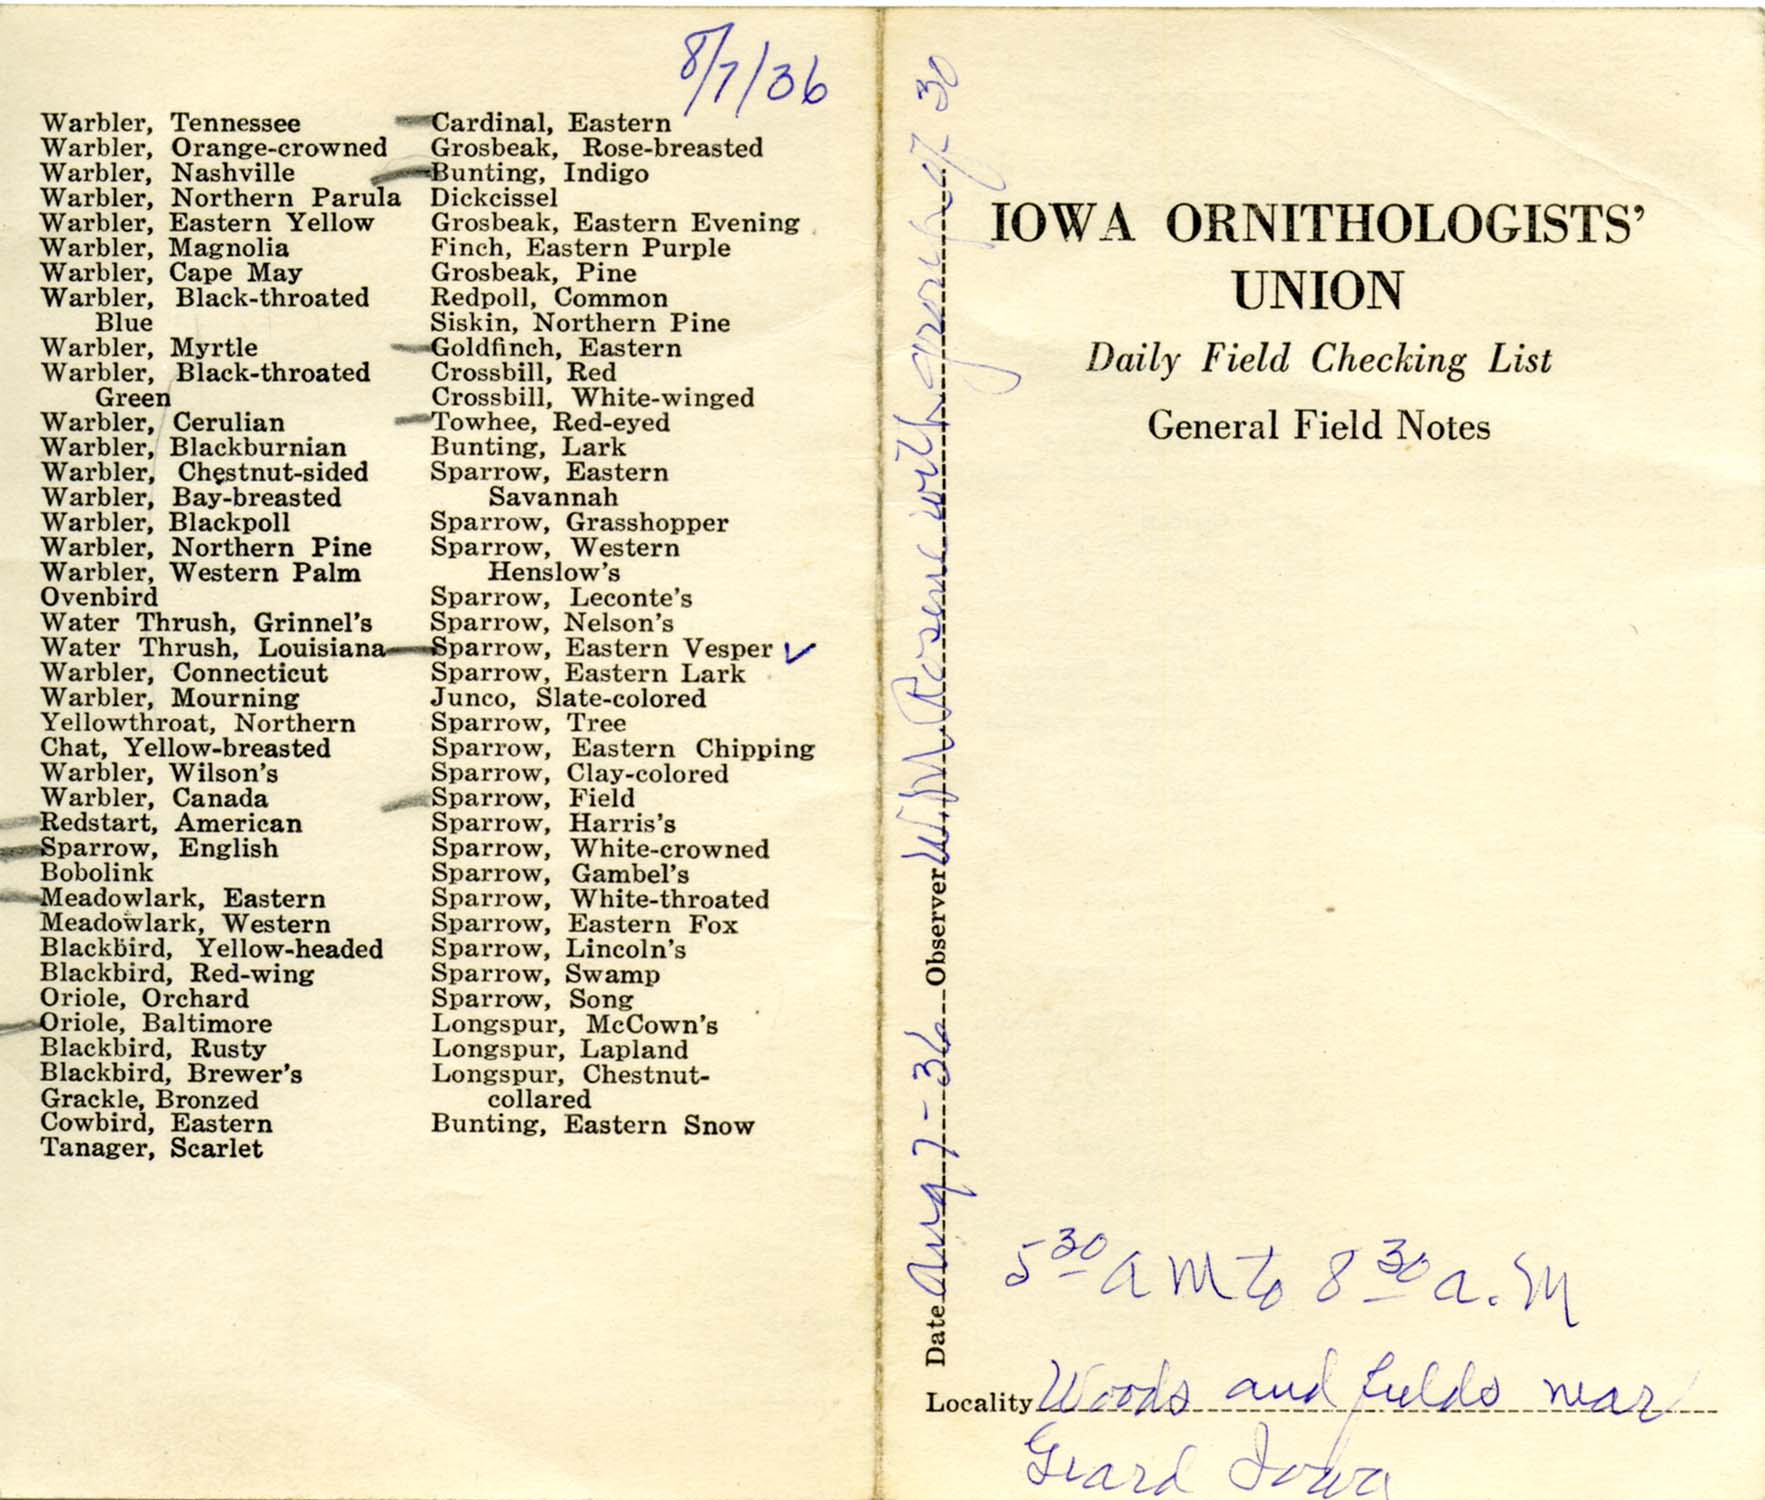 Daily field checking list, Walter Rosene, August 7, 1936